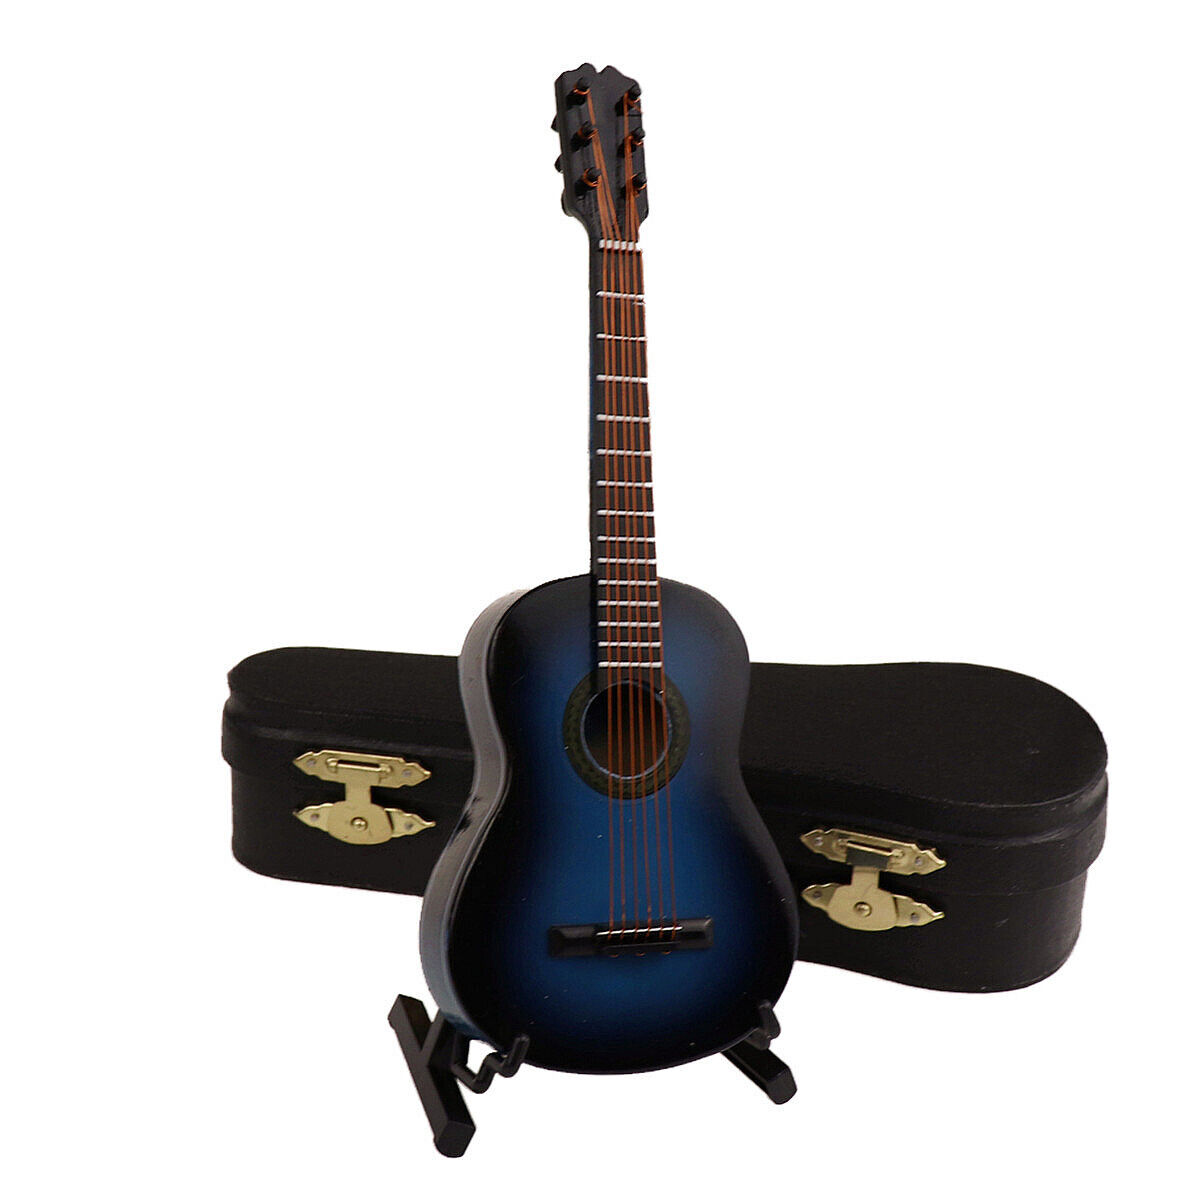 Dollhouse Miniature Mini Acoustic Guitar 1:12 Scale Toy Case Musical Instrument